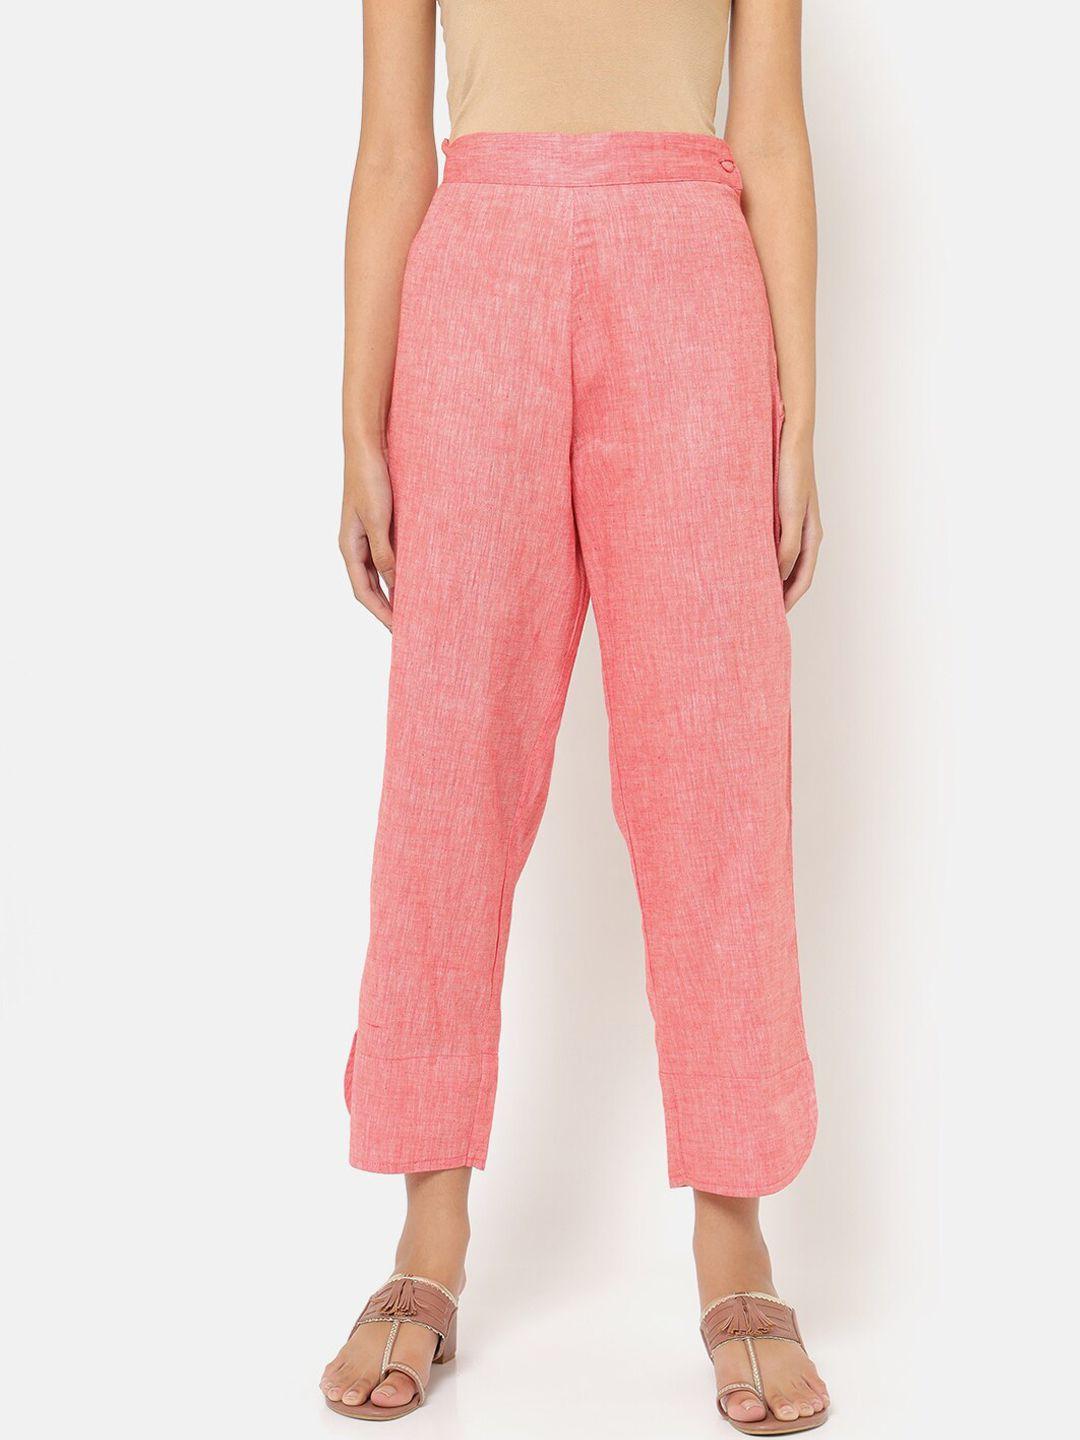 saaki women pink textured trousers